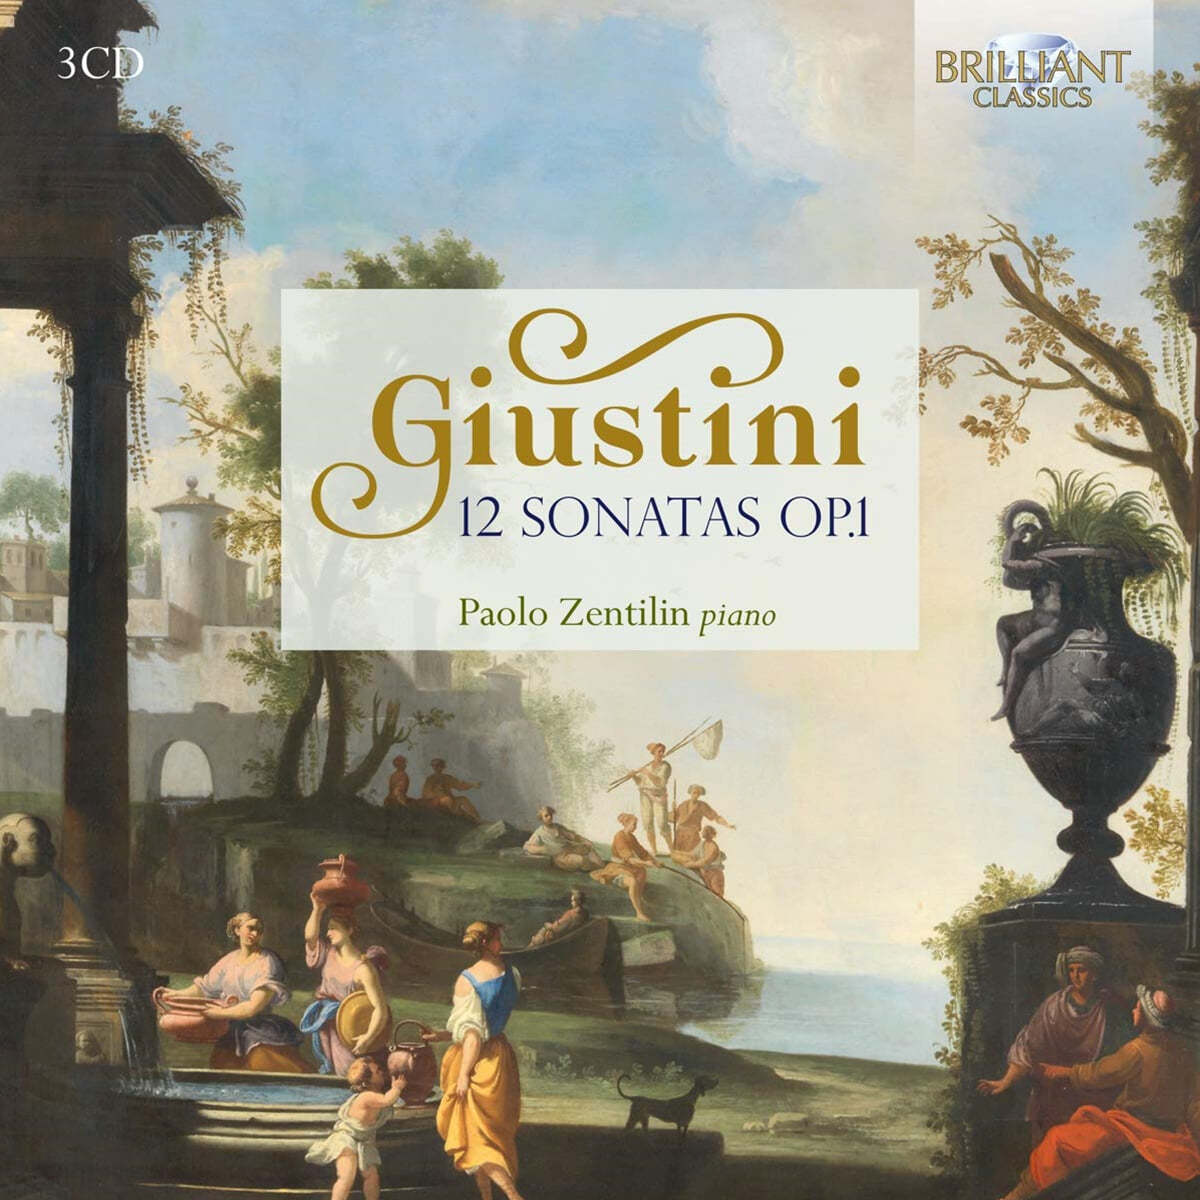 Paolo Zentilin 로도비코 주스티니: 피아노 소나타 (Lodovico Giustini: 12 Sonatas Op.1) 